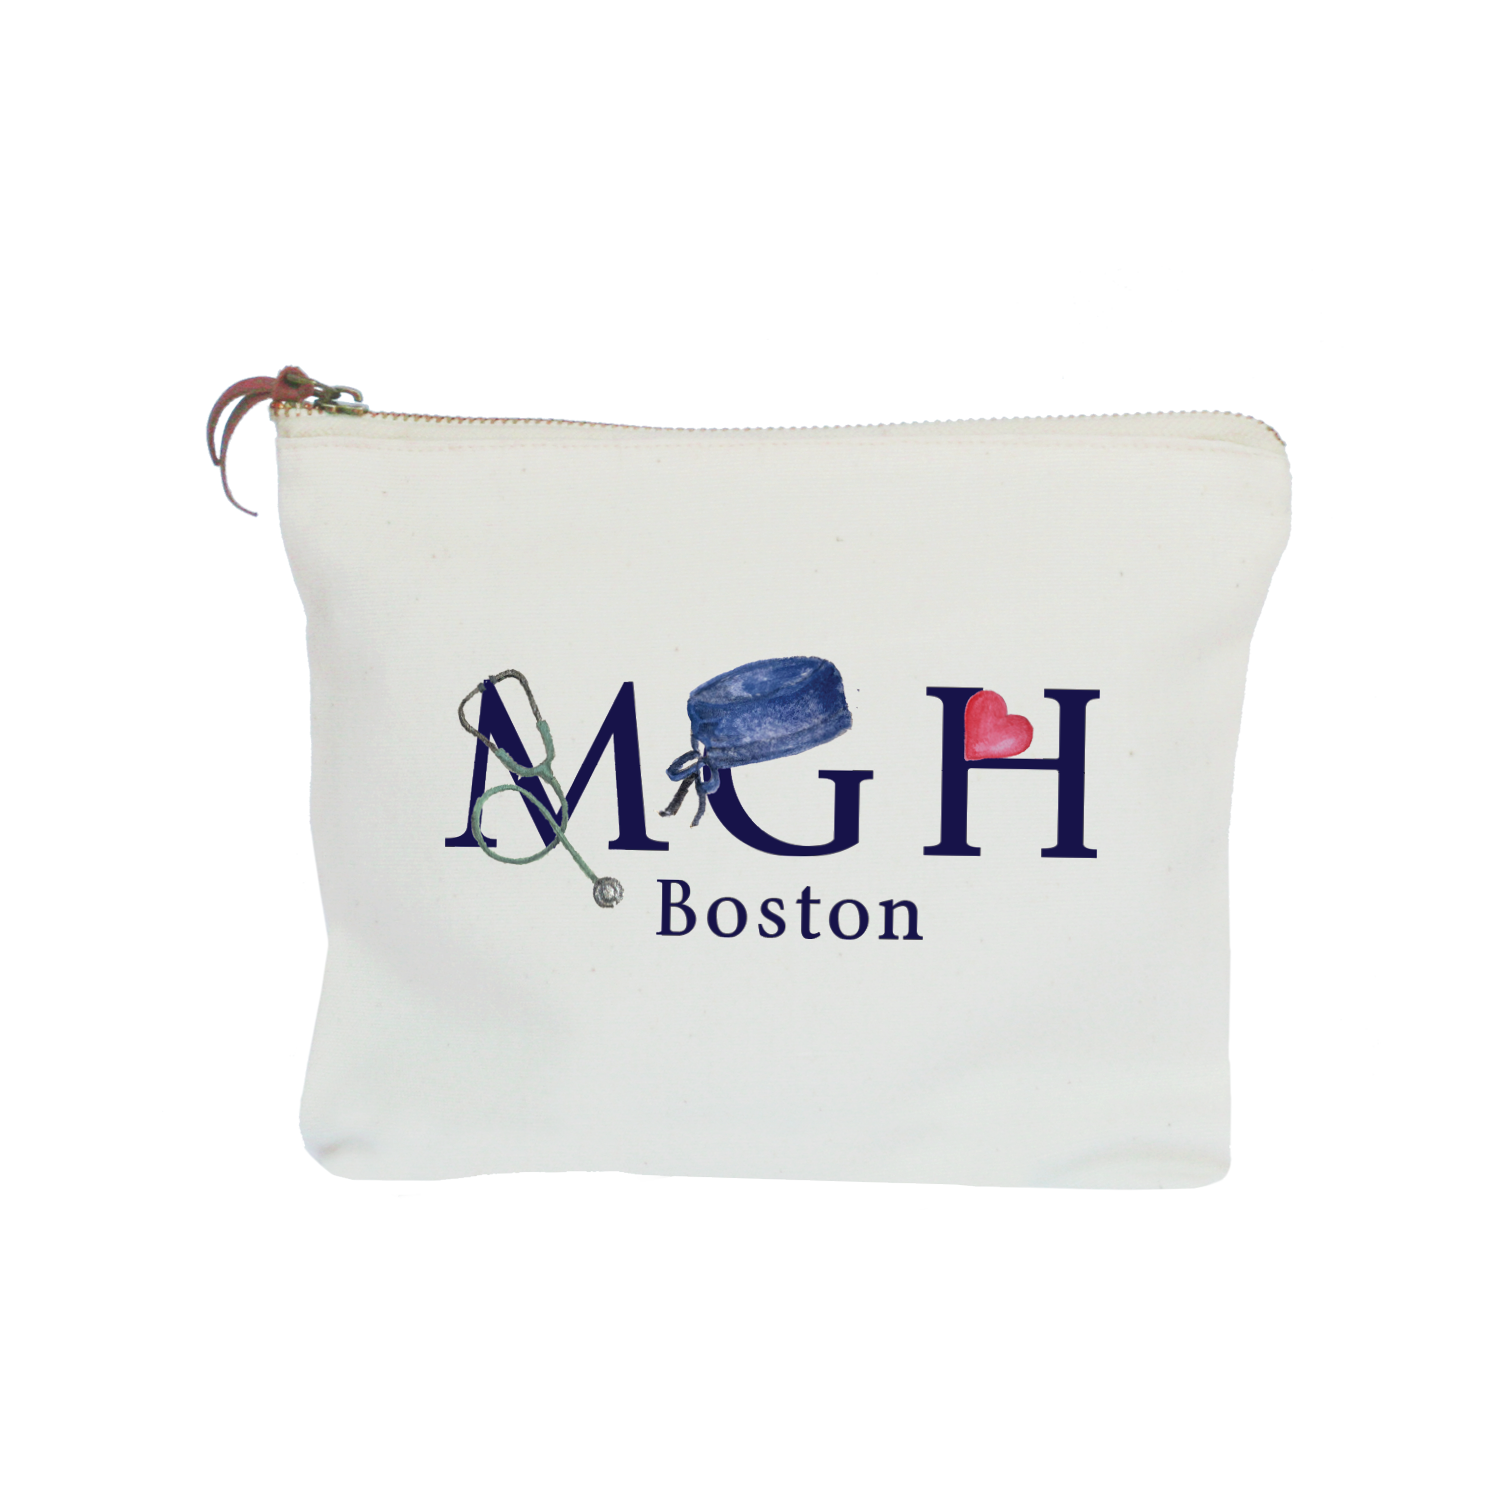 MGH Boston zipper pouch